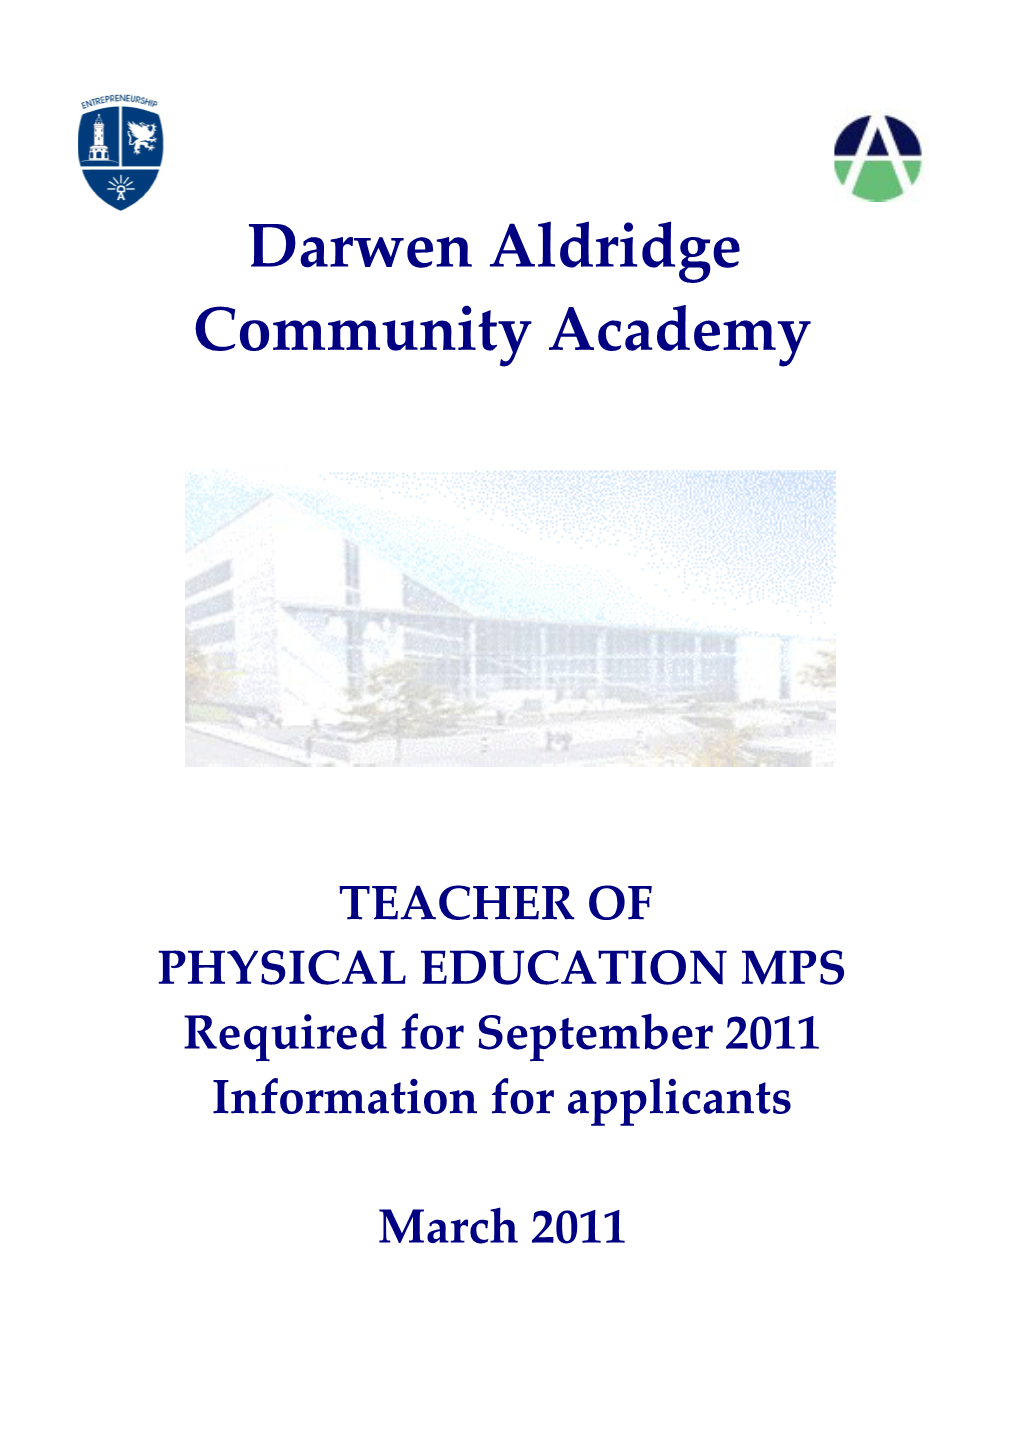 The Darwen Aldridge Community Academy